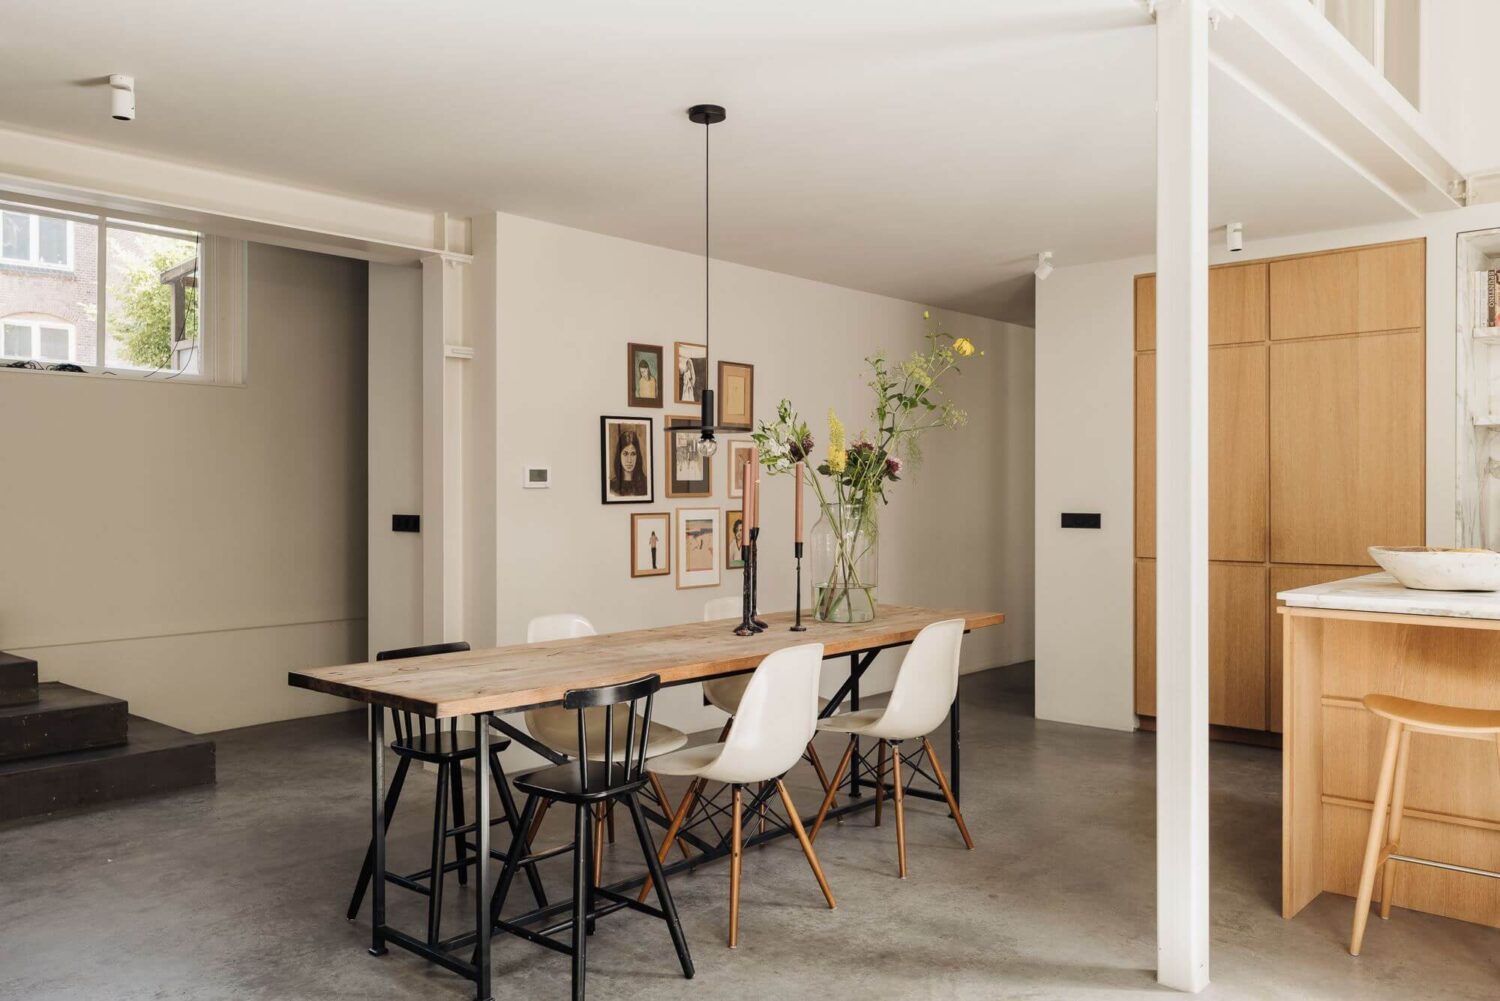 modern-kitchen-dining-room-loft-school-conversion-nordroom